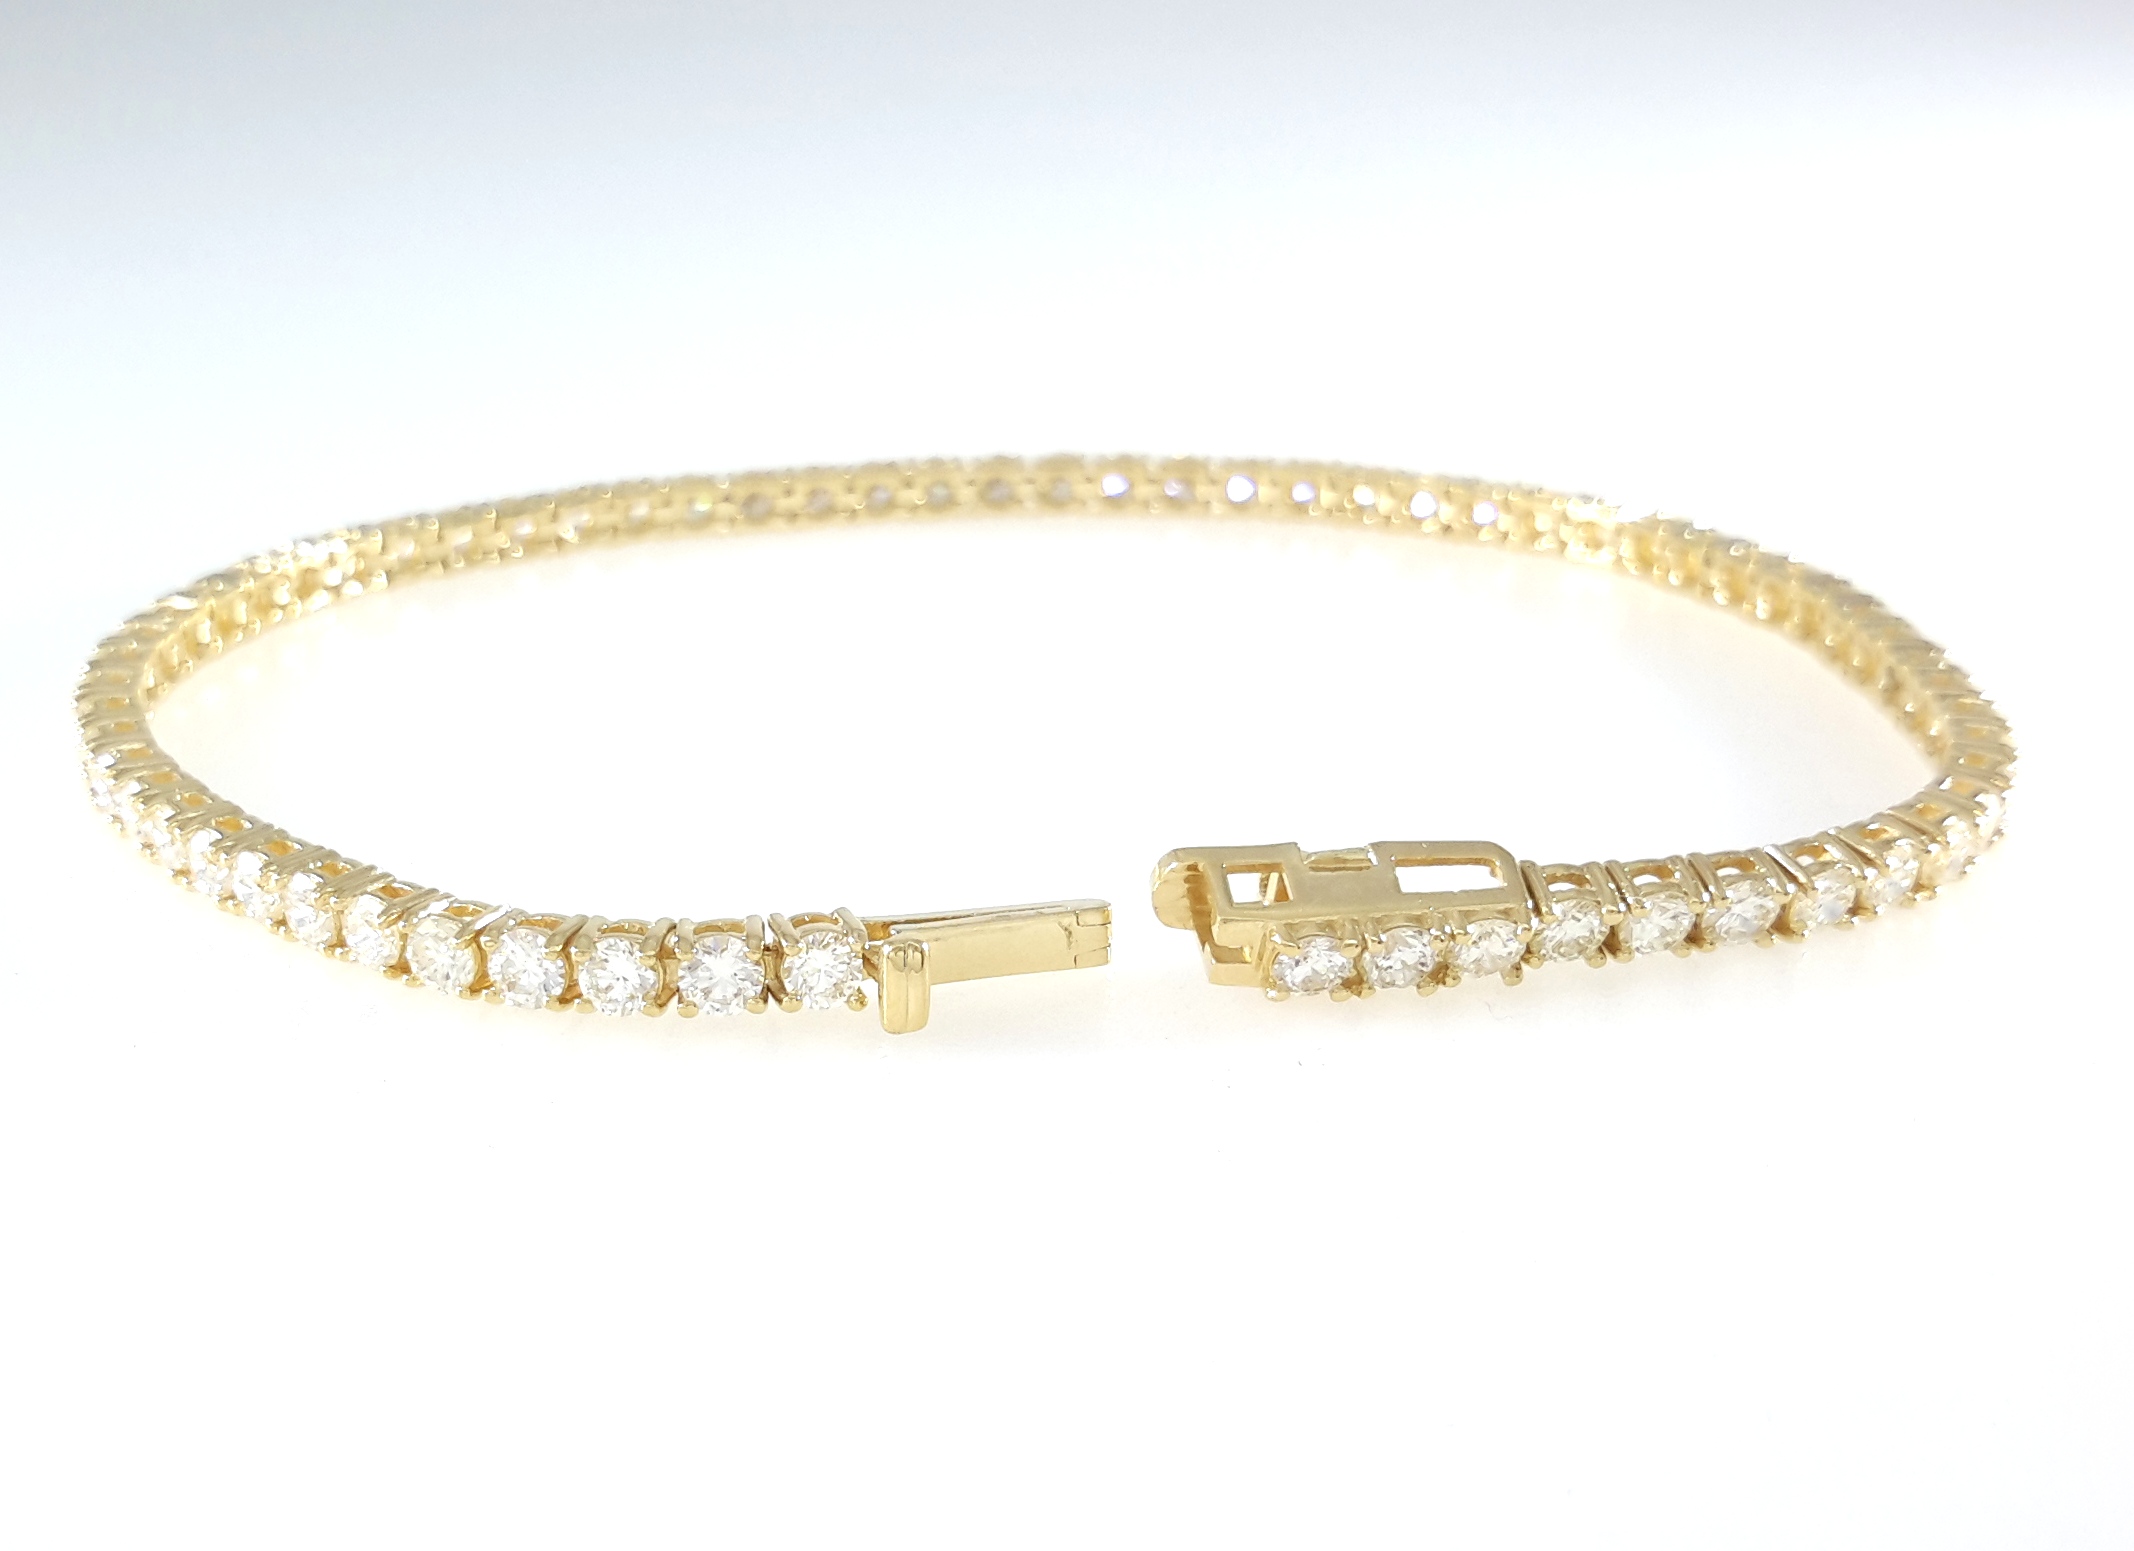 Clearance Diamond Bracelet in yellow gold SBR 68 - Getzow Jewelers